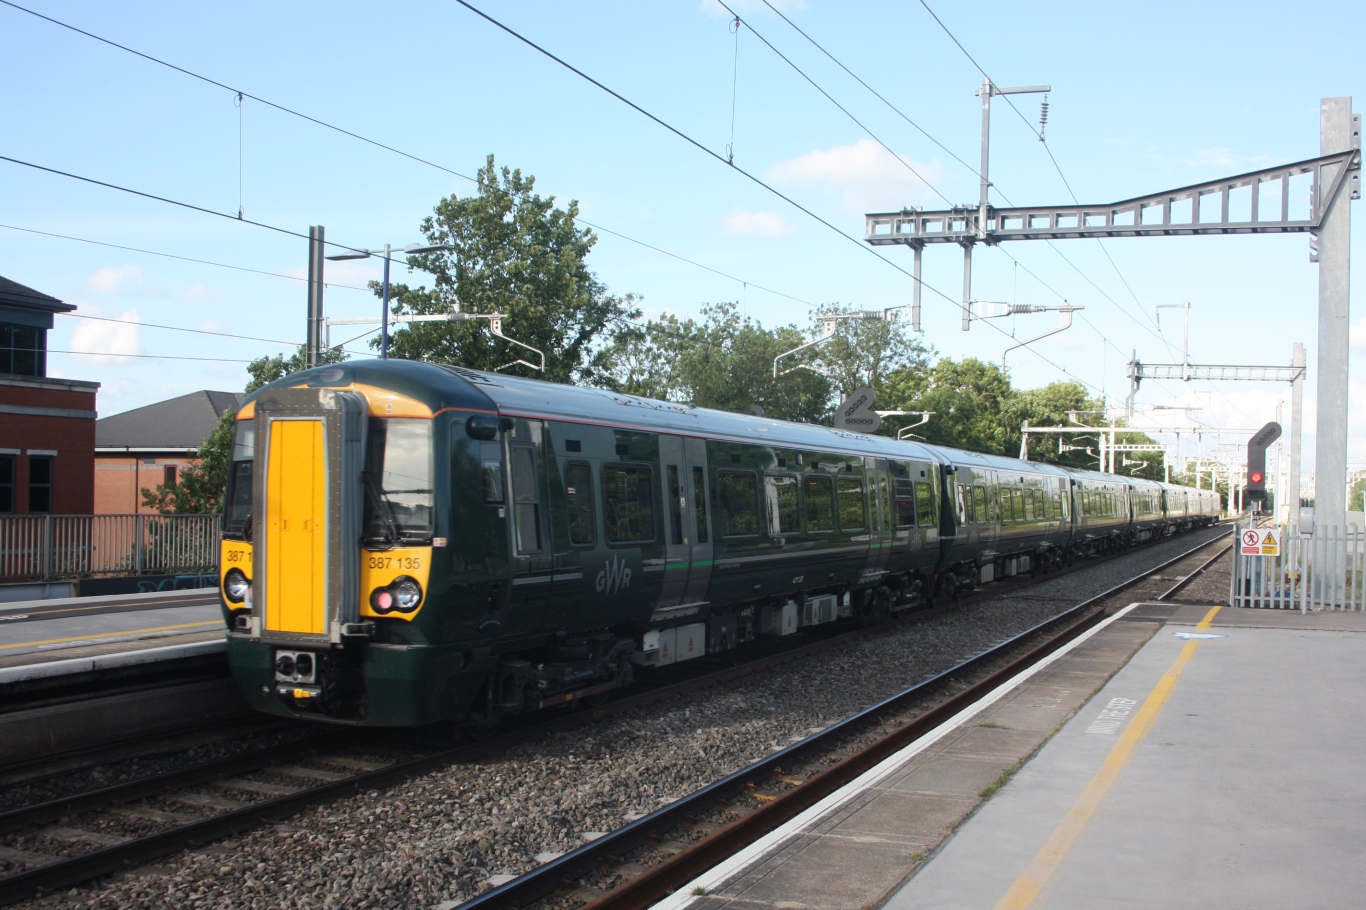 GWR Class 387